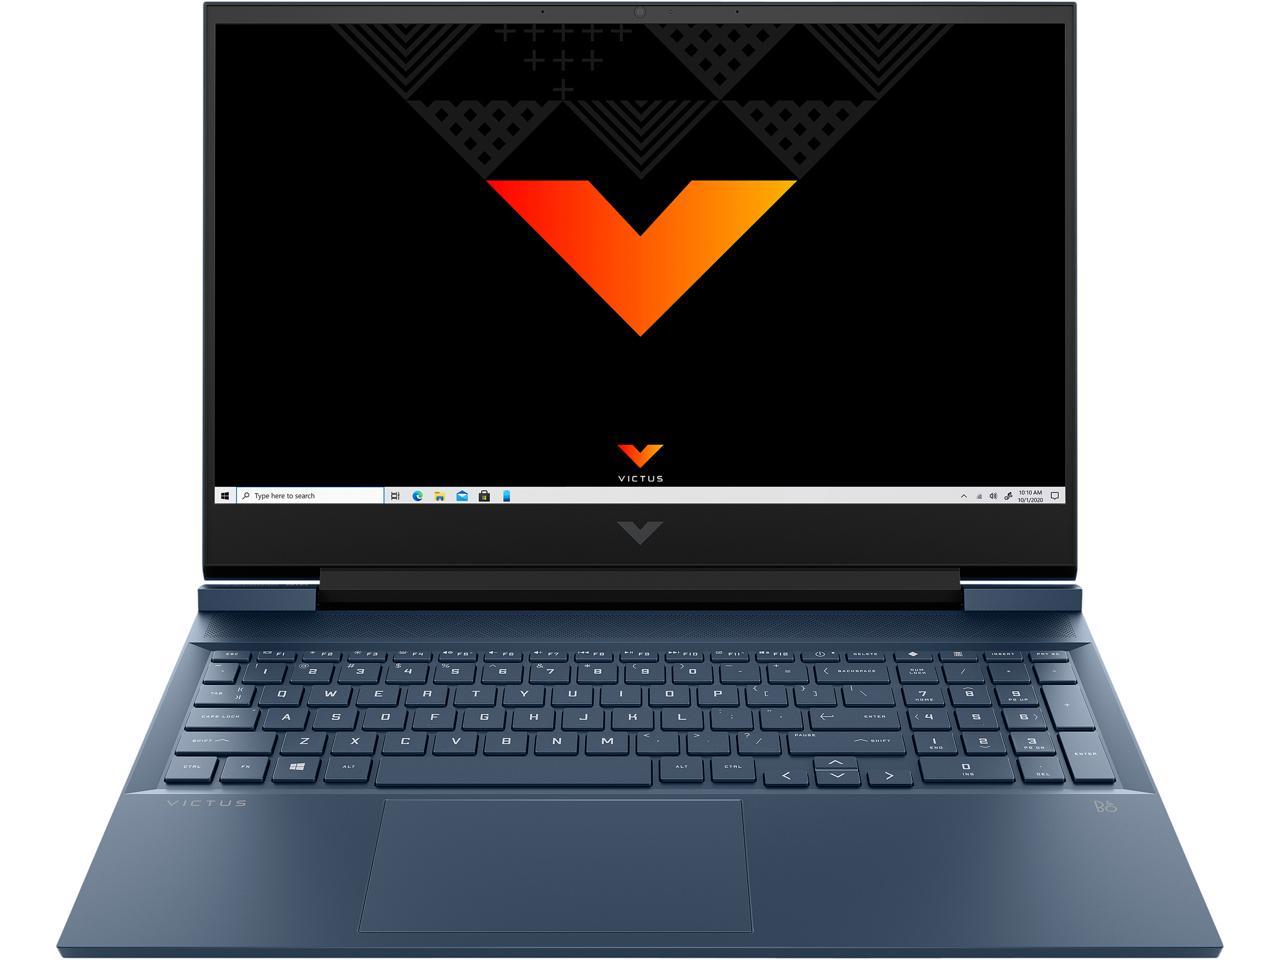 Victus 16 Gaming Laptop, NVIDIA GeForce RTX 3050, AMD Ryzen 5 5600H Processor, 8 GB RAM, 512 GB SSD, 16.1” Full HD IPS Display, Windows 10 Home, Backlit Keyboard, OMEN Gaming Hub (16-e0010nr, 2021)